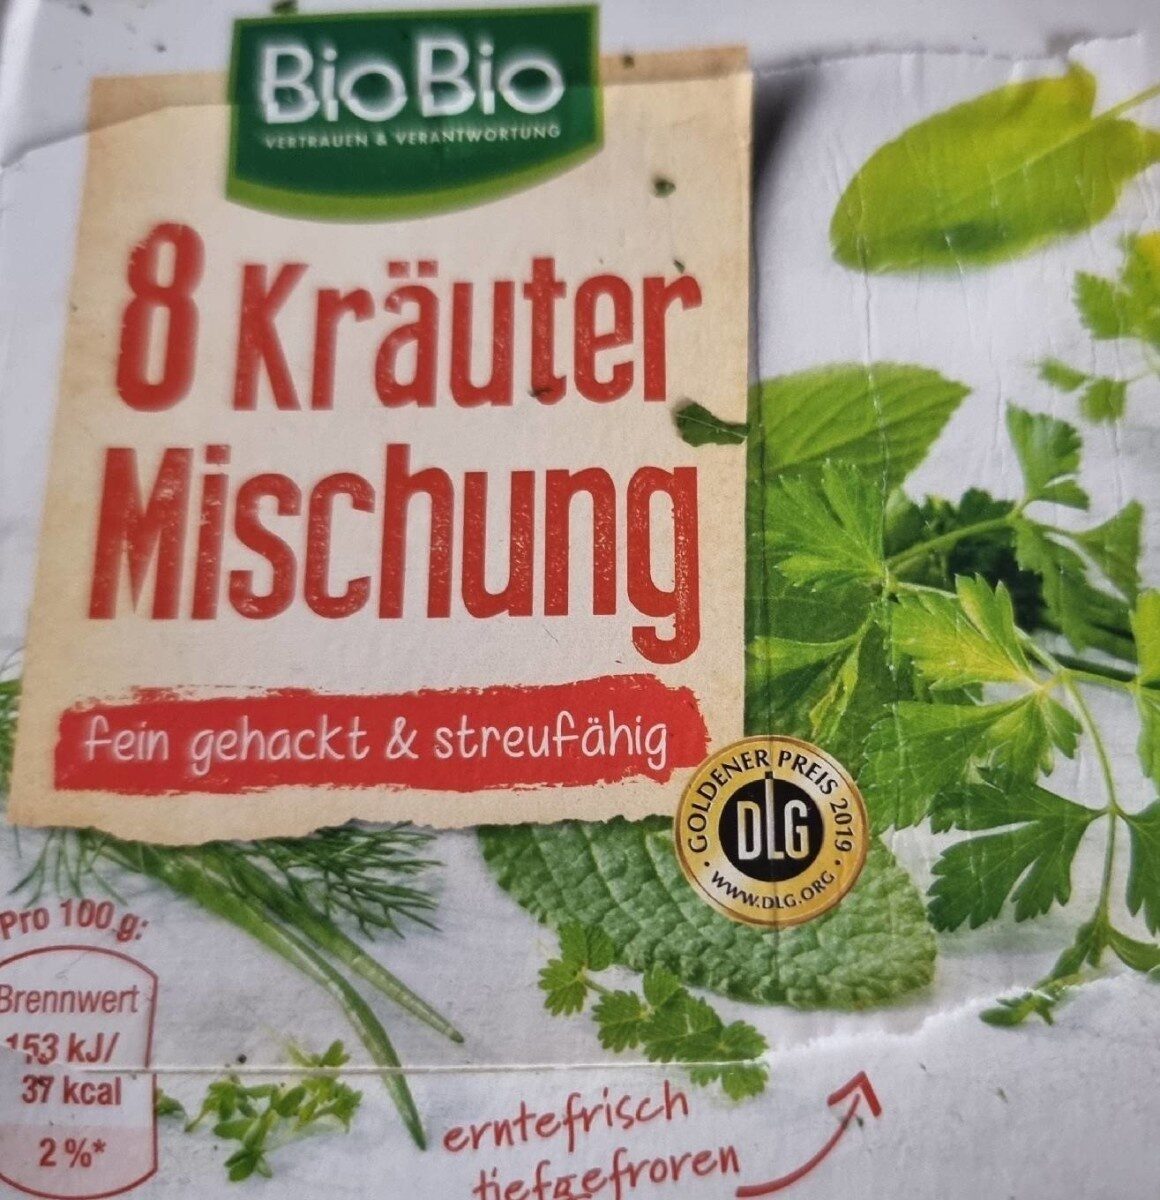 BioBio 8 Kräuter Mischung - Product - de